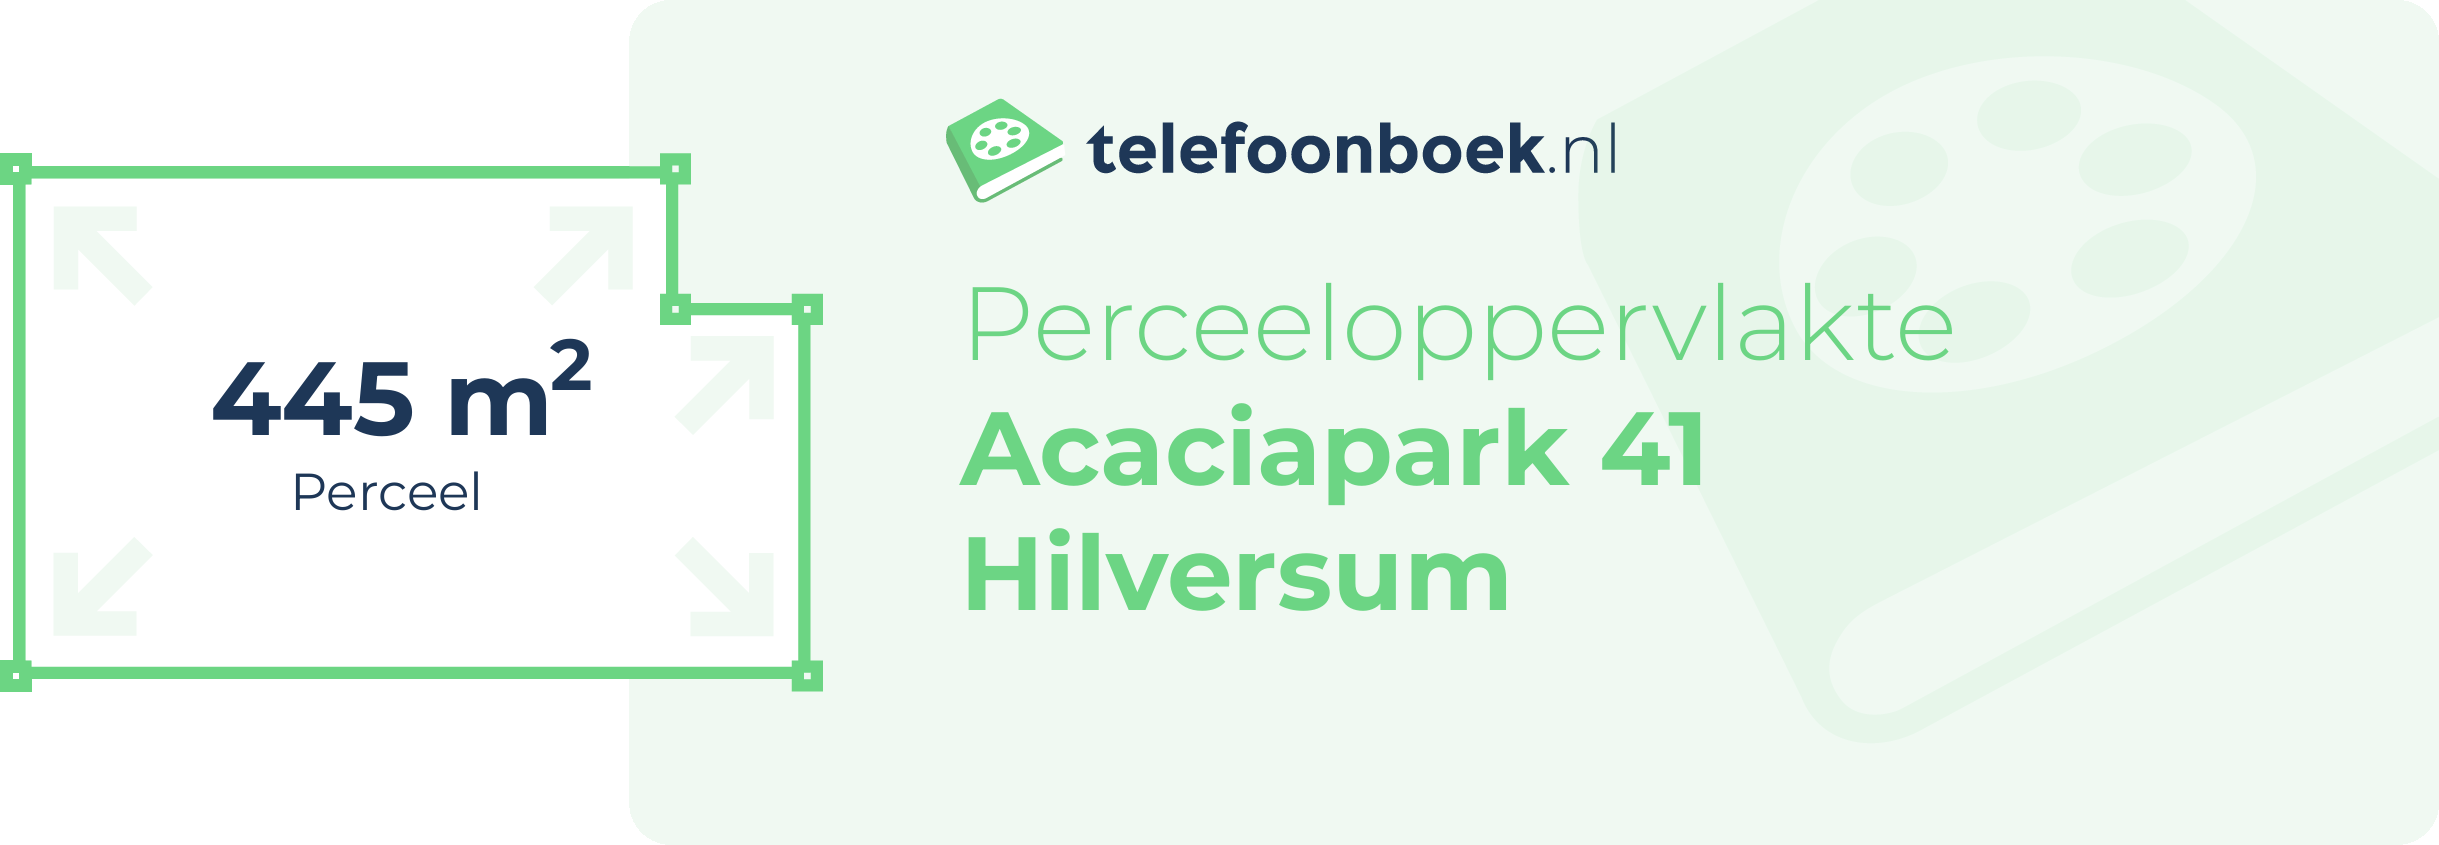 Perceeloppervlakte Acaciapark 41 Hilversum